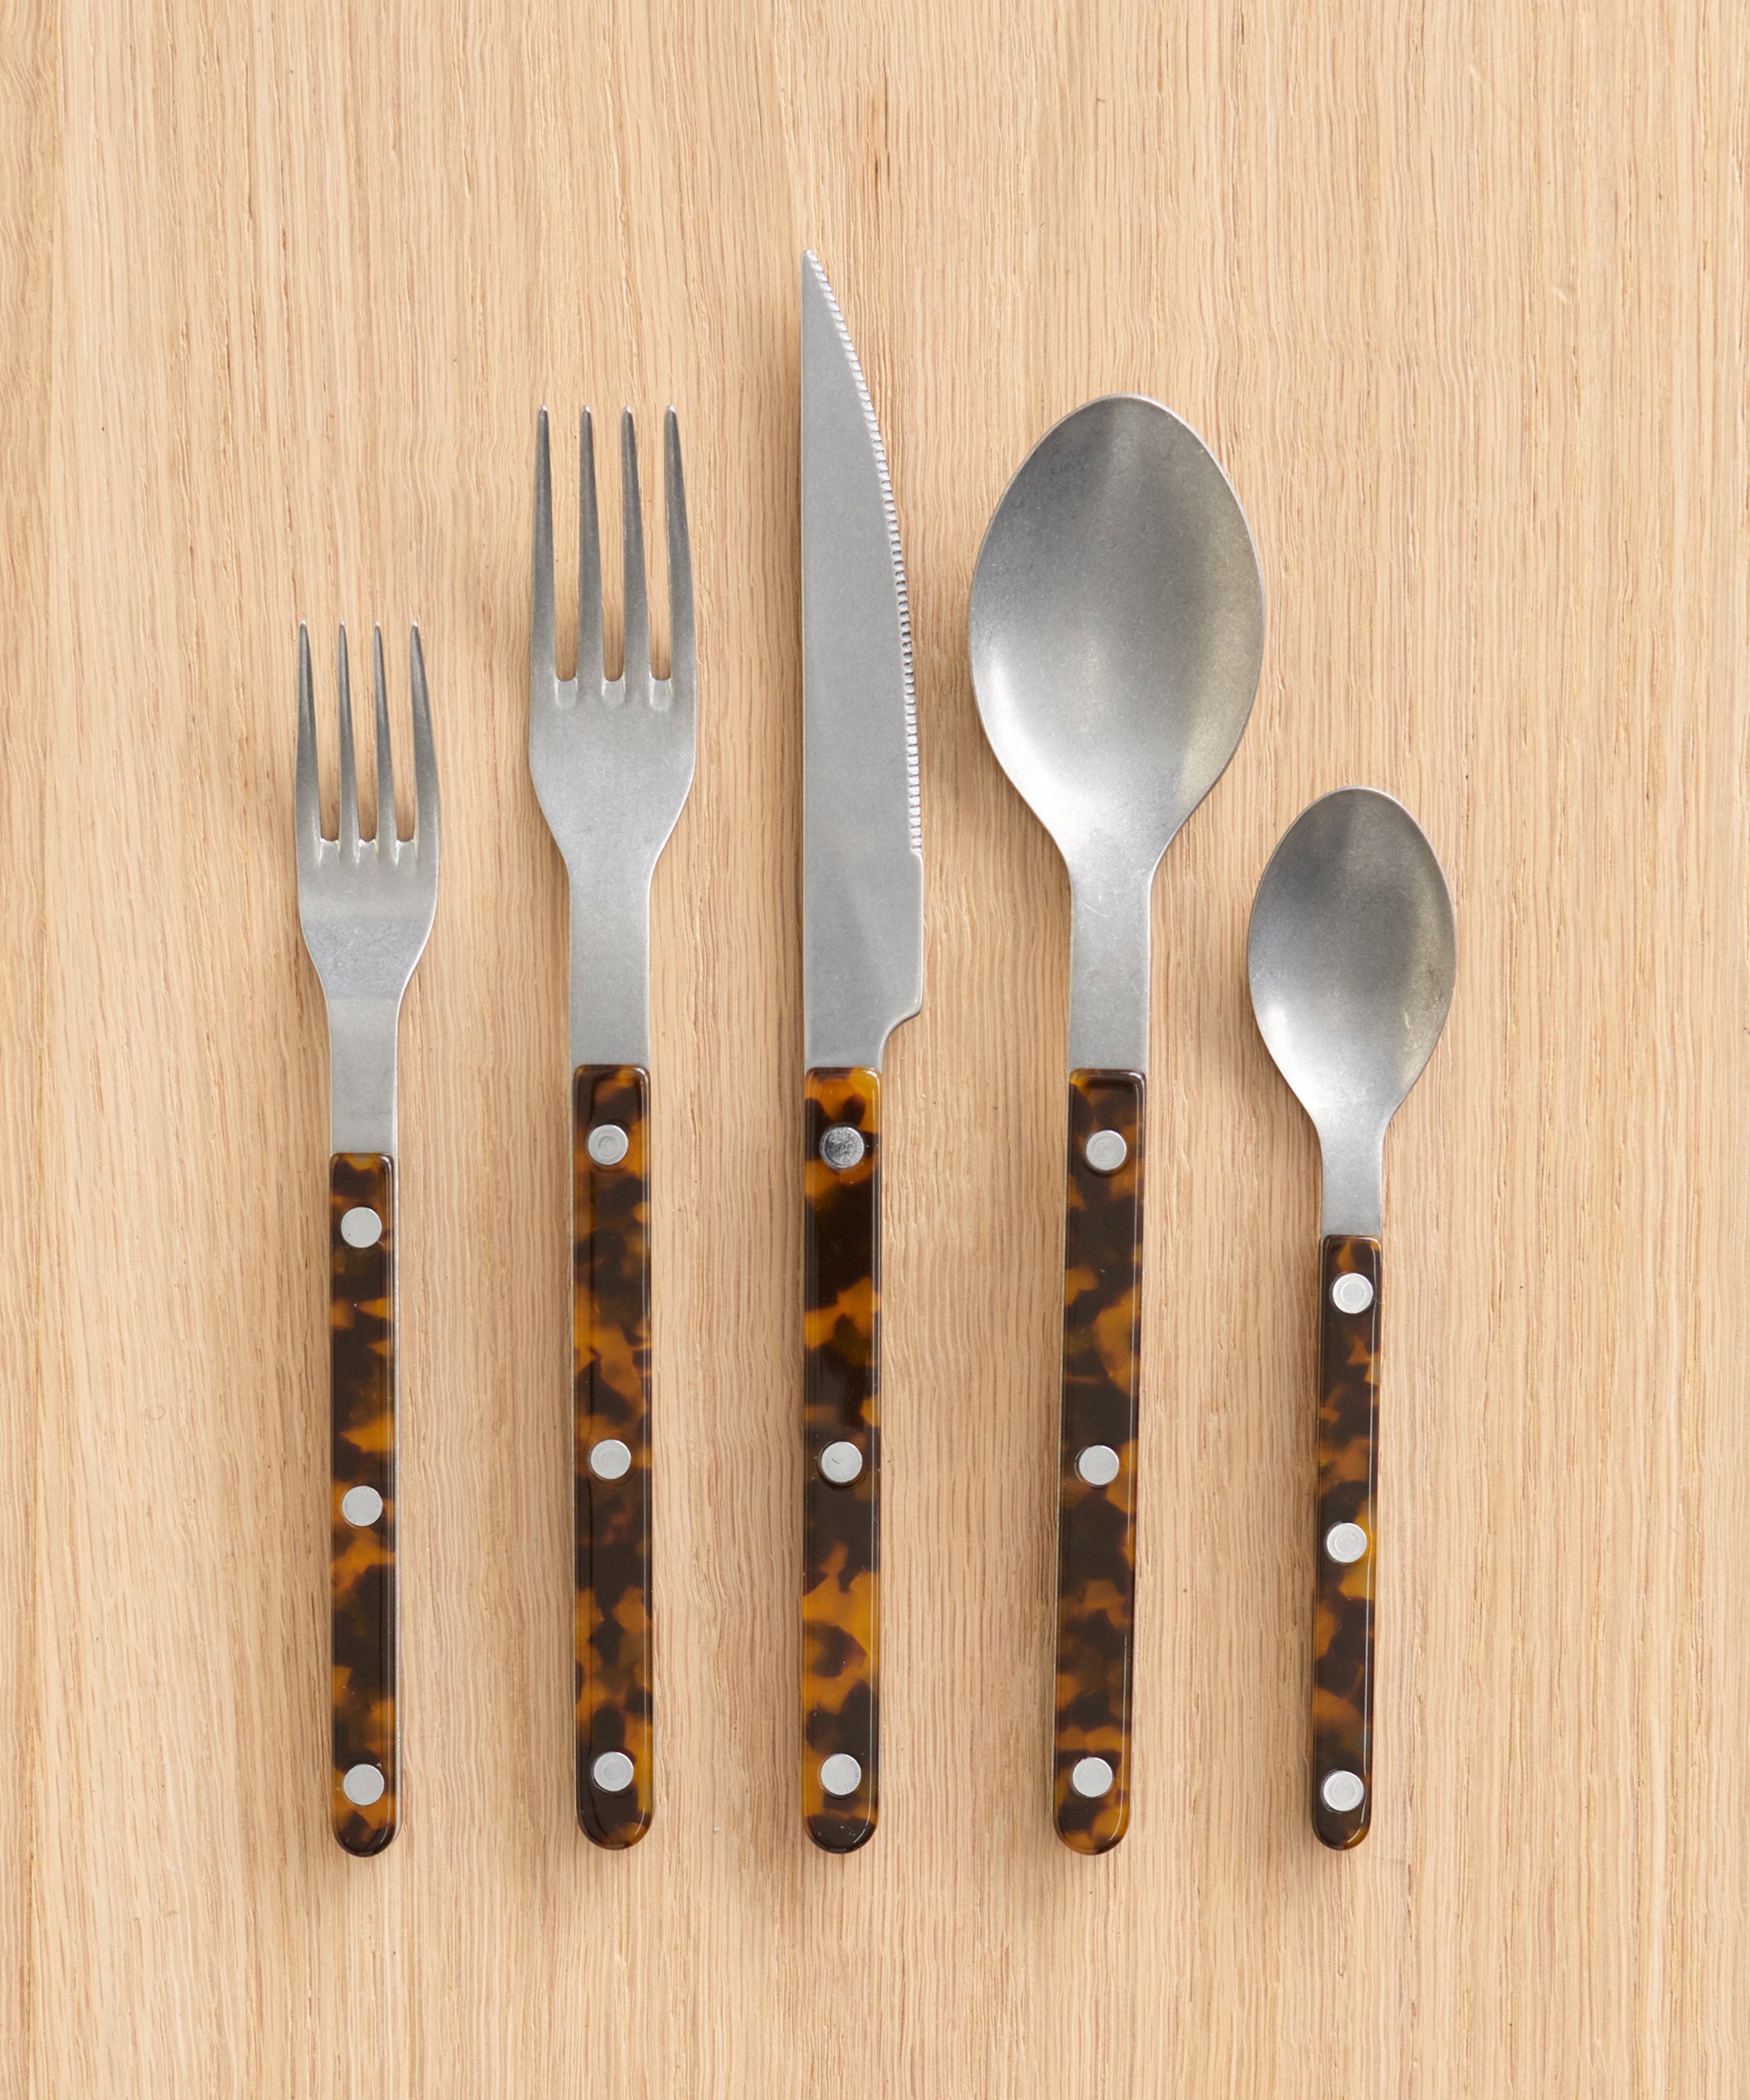 Bistro Vintage Finish Cutlery Set